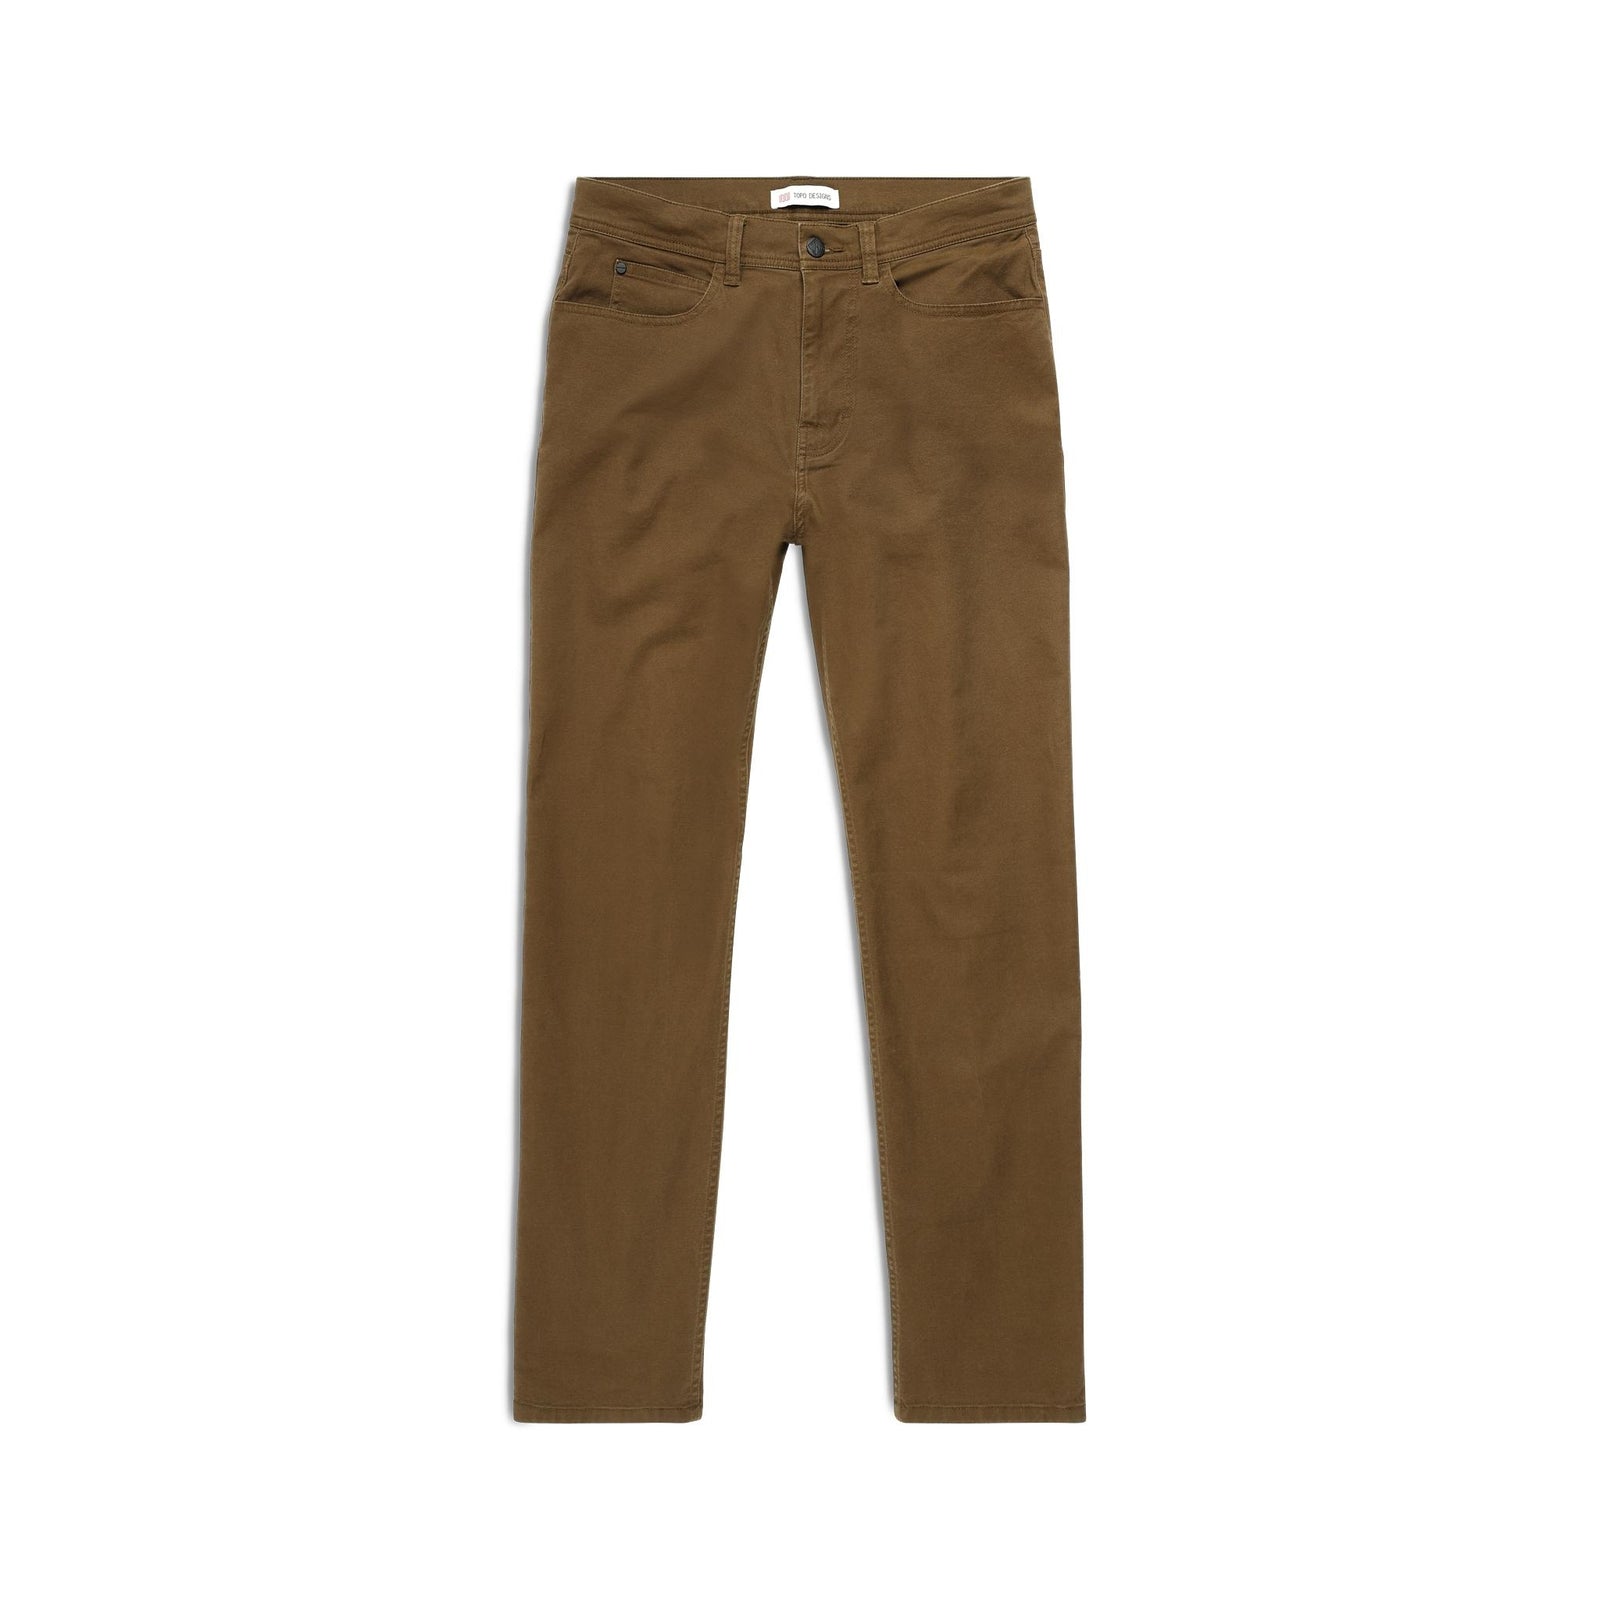 Front View of Topo Designs Dirt 5-Pocket Pants - Men's in "Desert Palm"